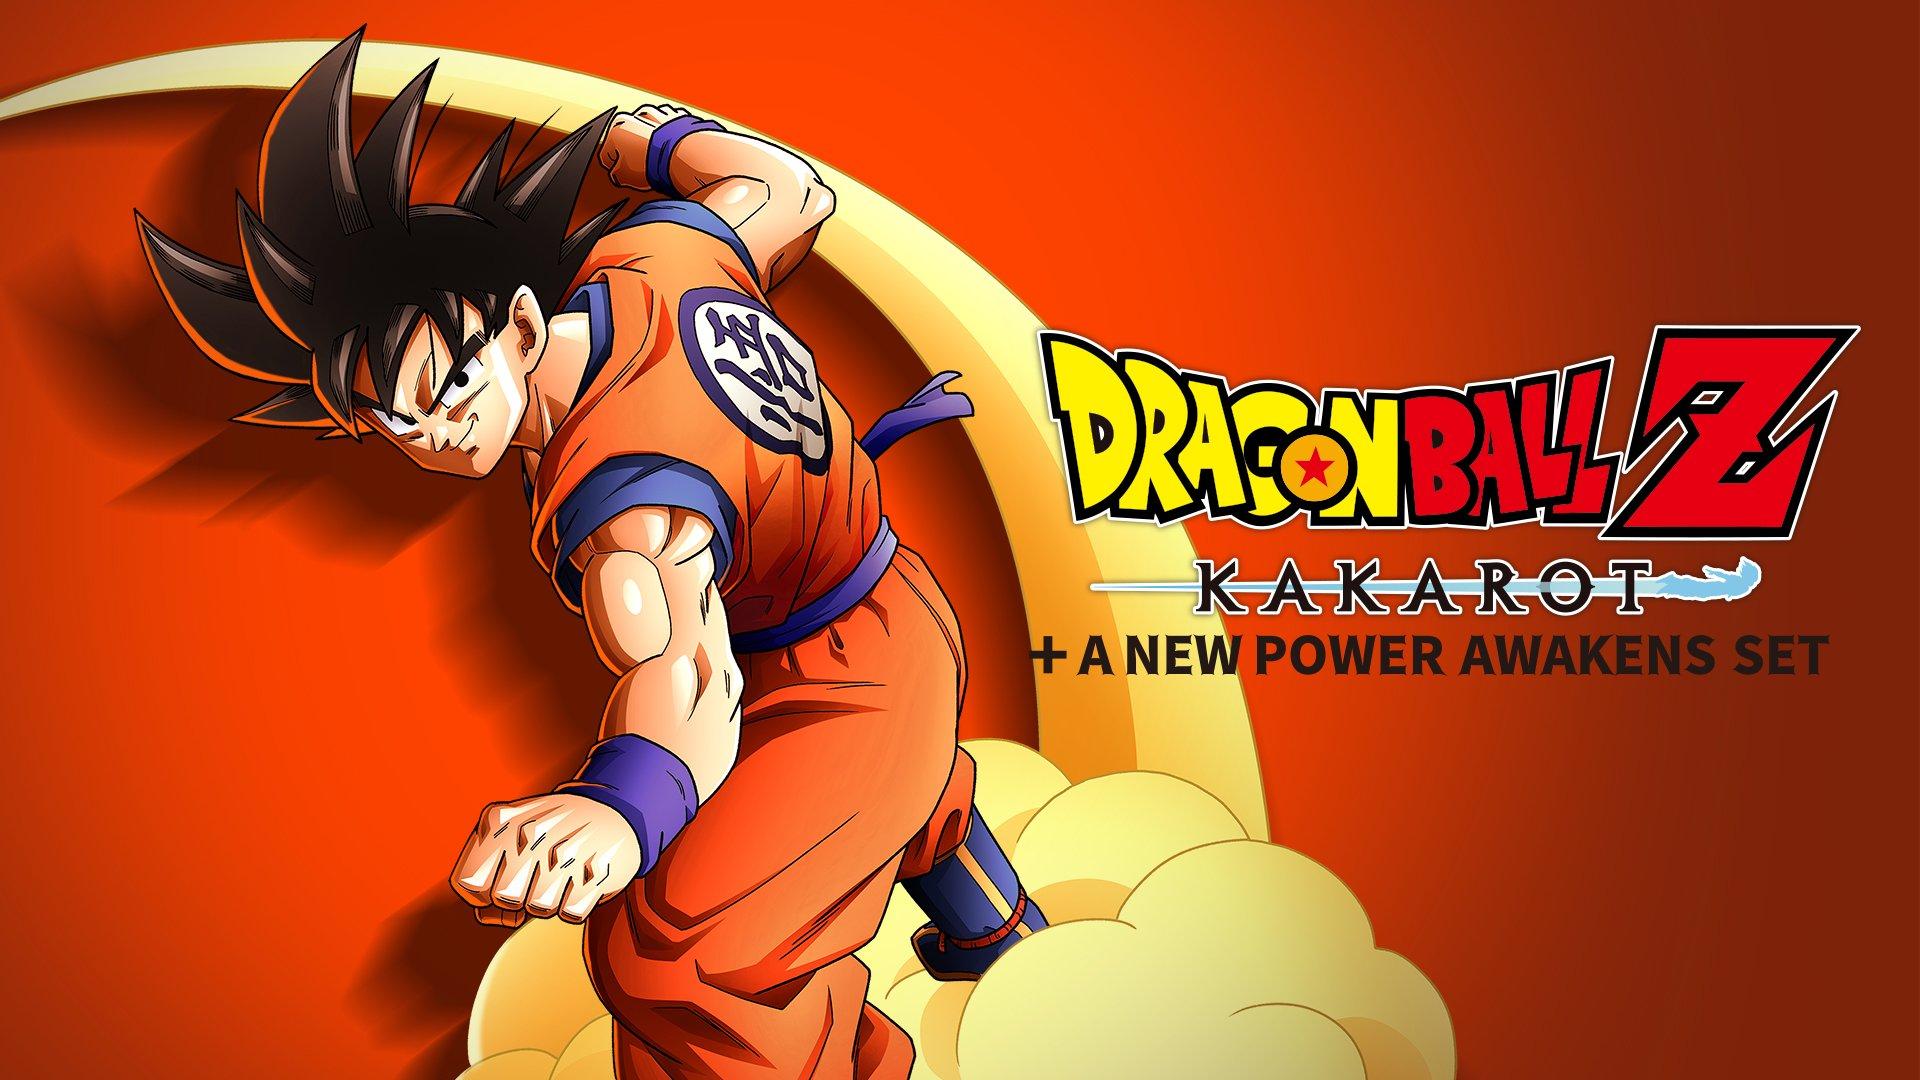 Dragon Ball Z: Kakarot and A New Power Awakens Set